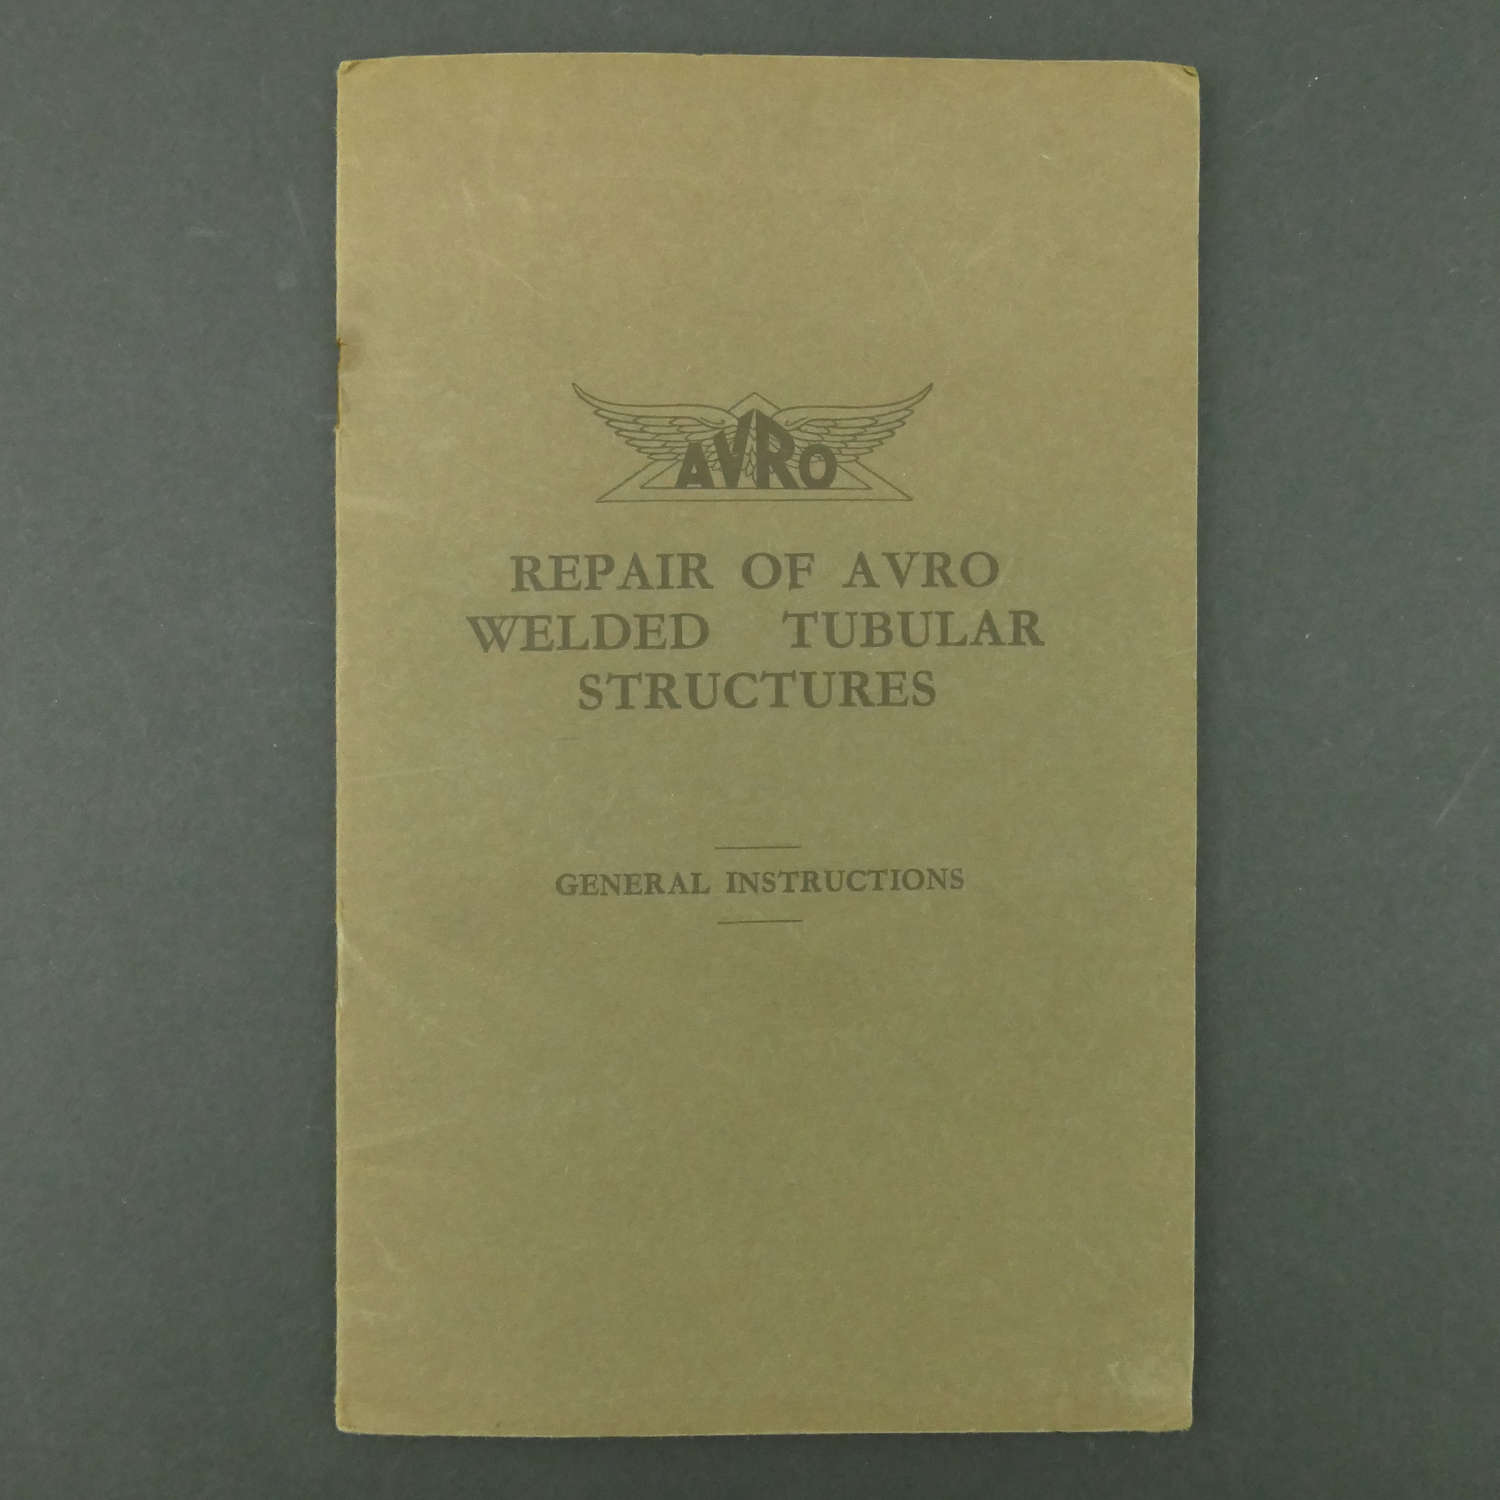 AVRO - Repair of welded tubular structures